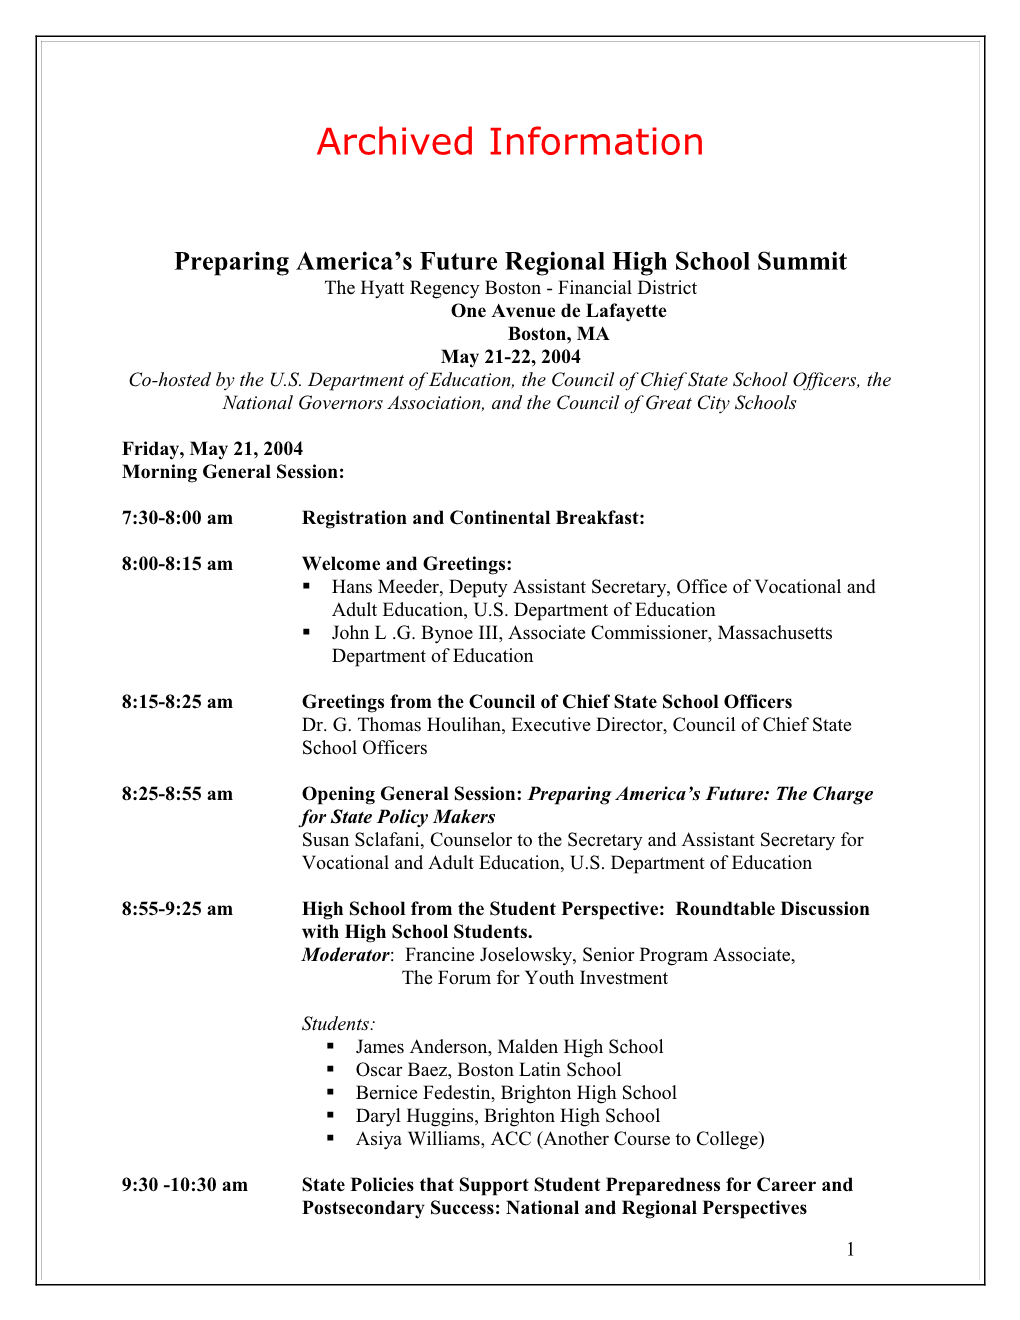 Archived: Preparing America's Future Regional High School Summit (MS Word)